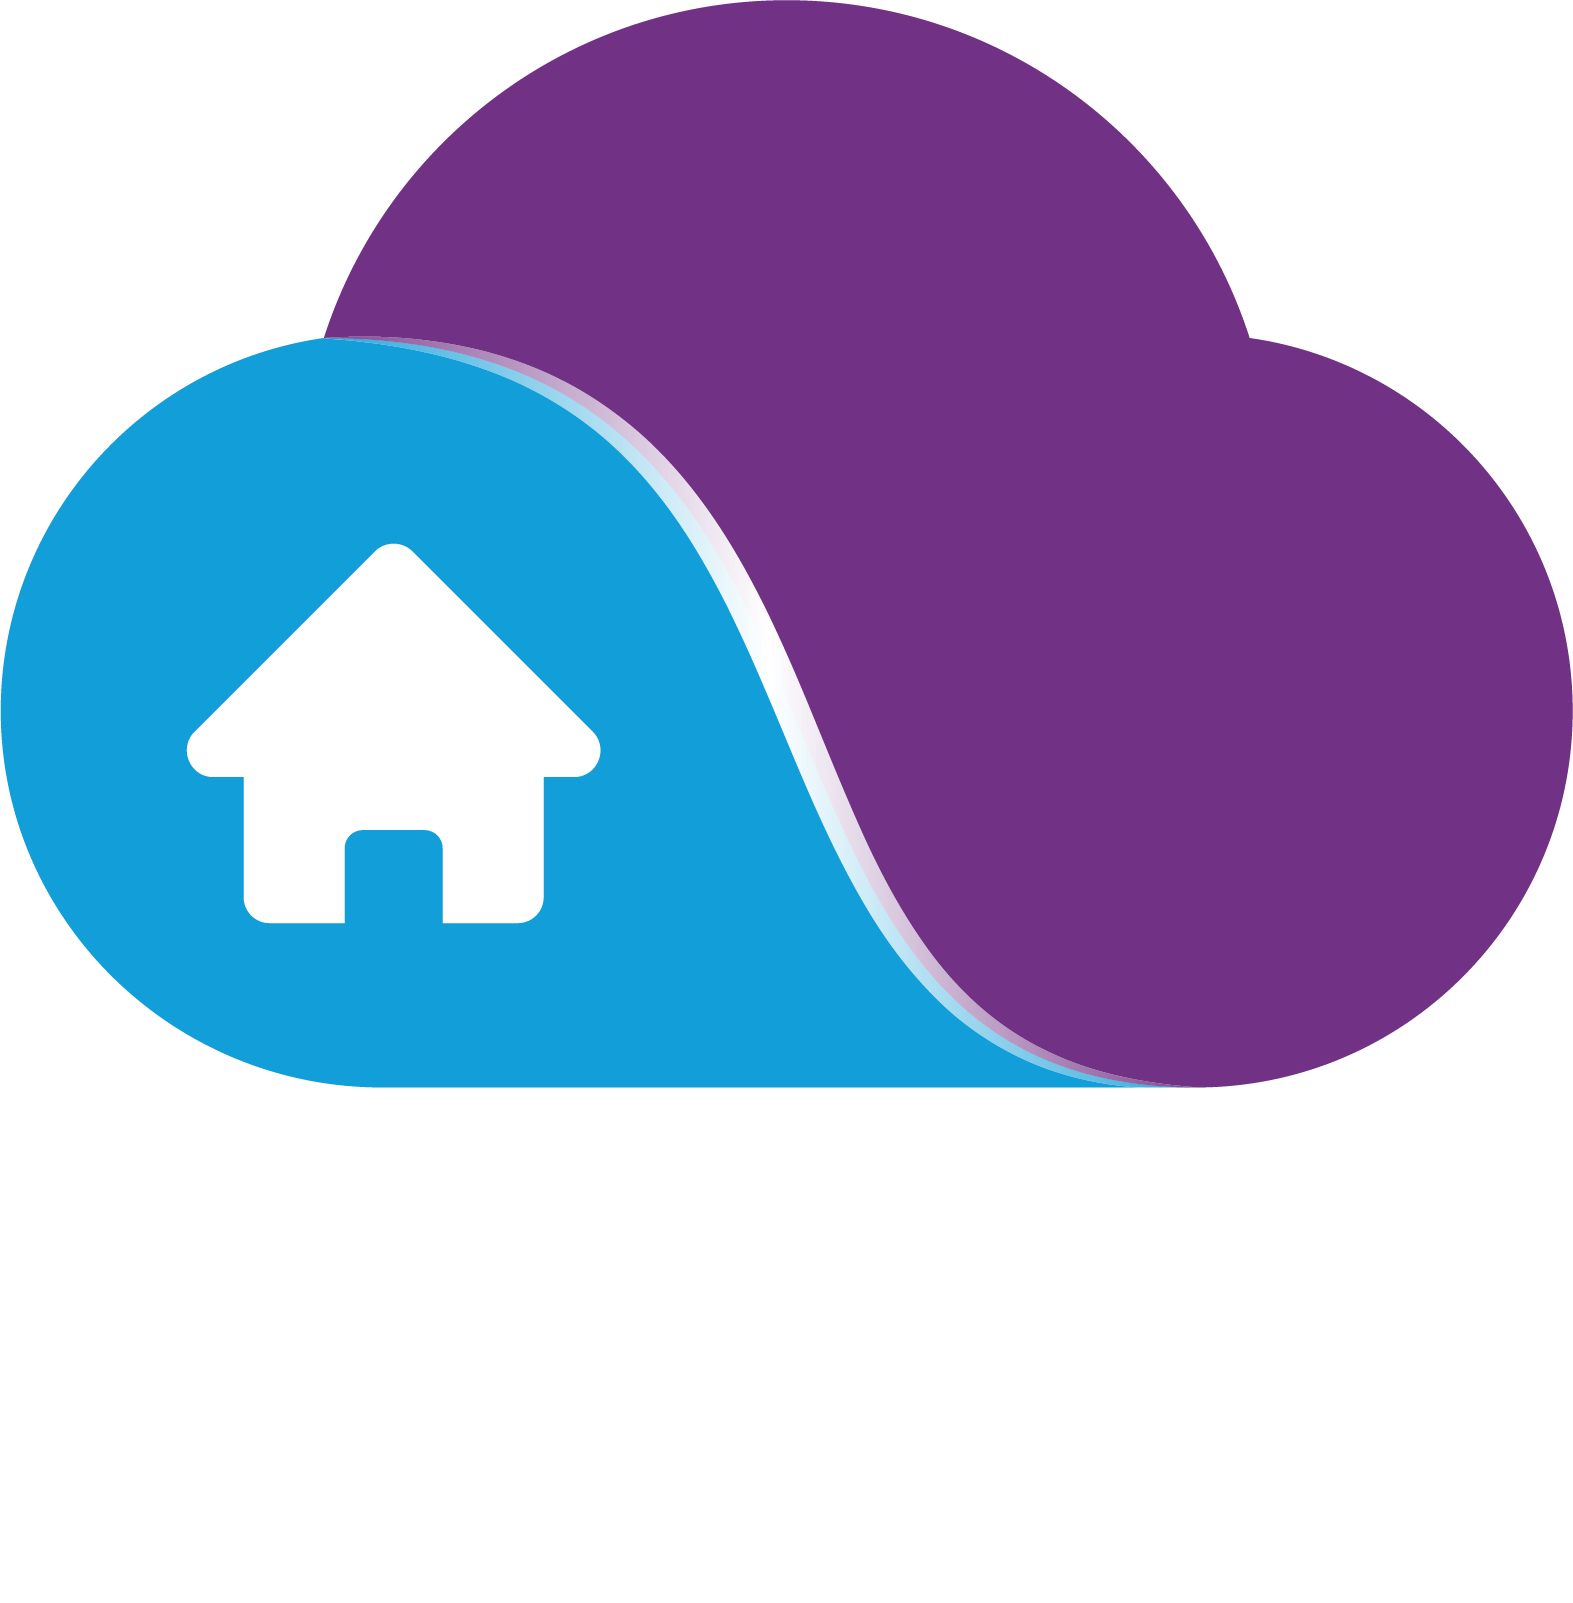 Icone CloudDirect Hosting texte blanc